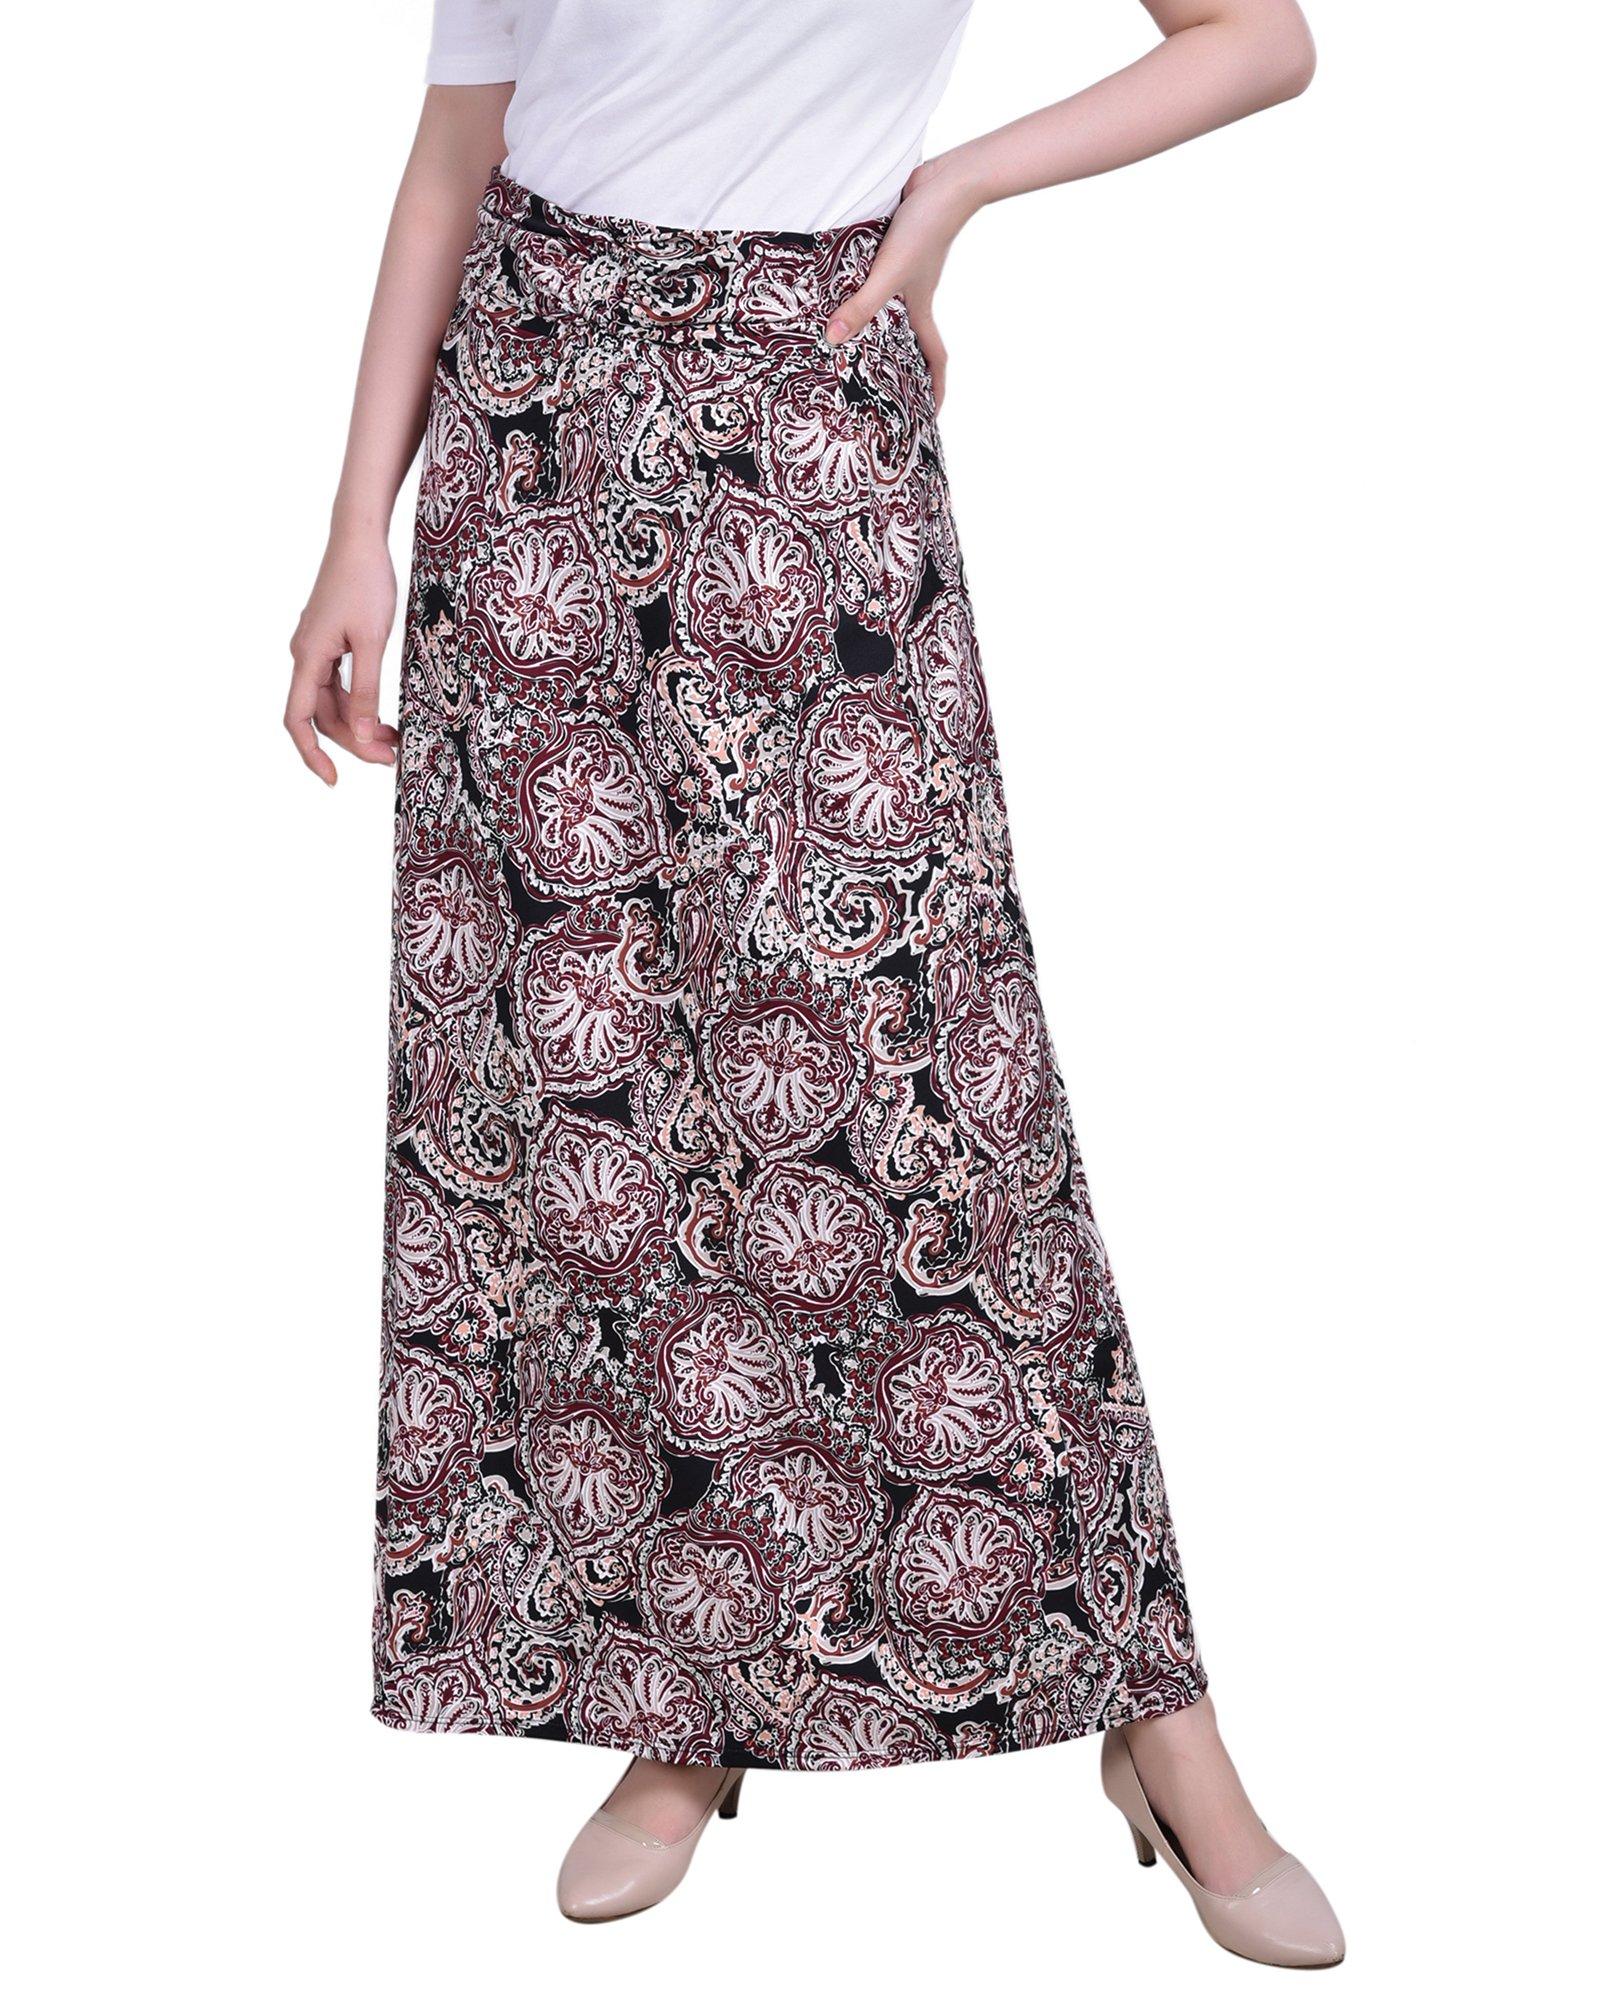 Petite A-Line Printed Maxi Skirt